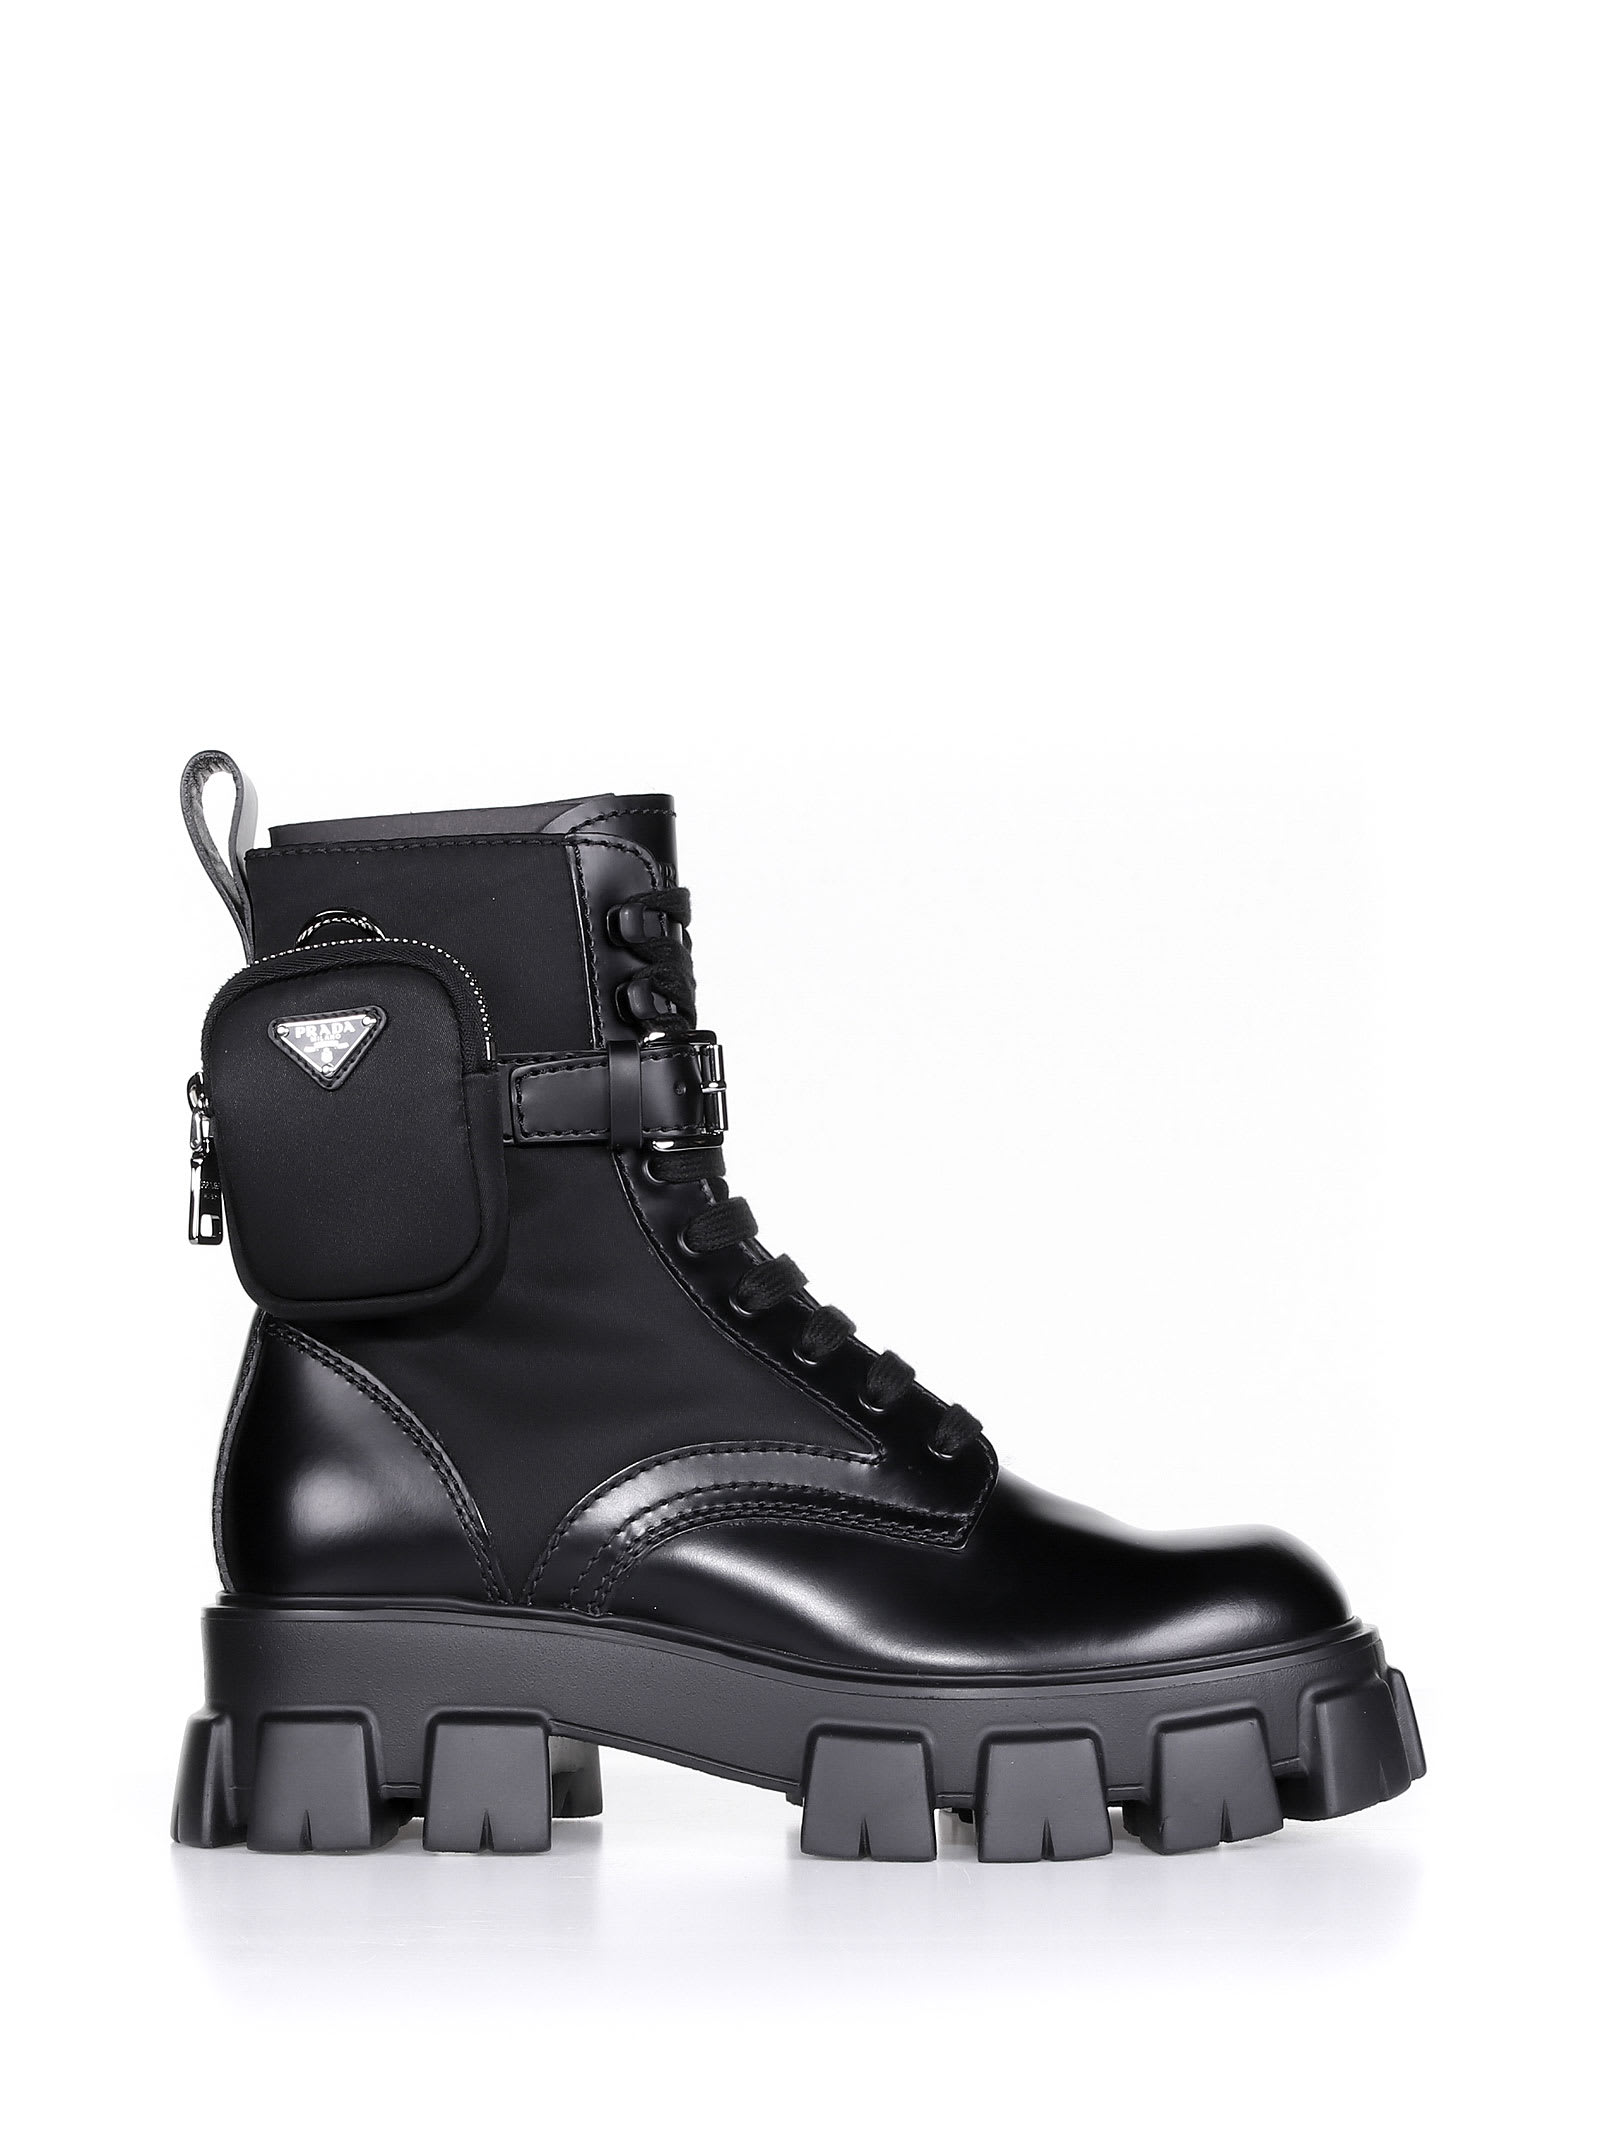 Prada Boot In Black Leather